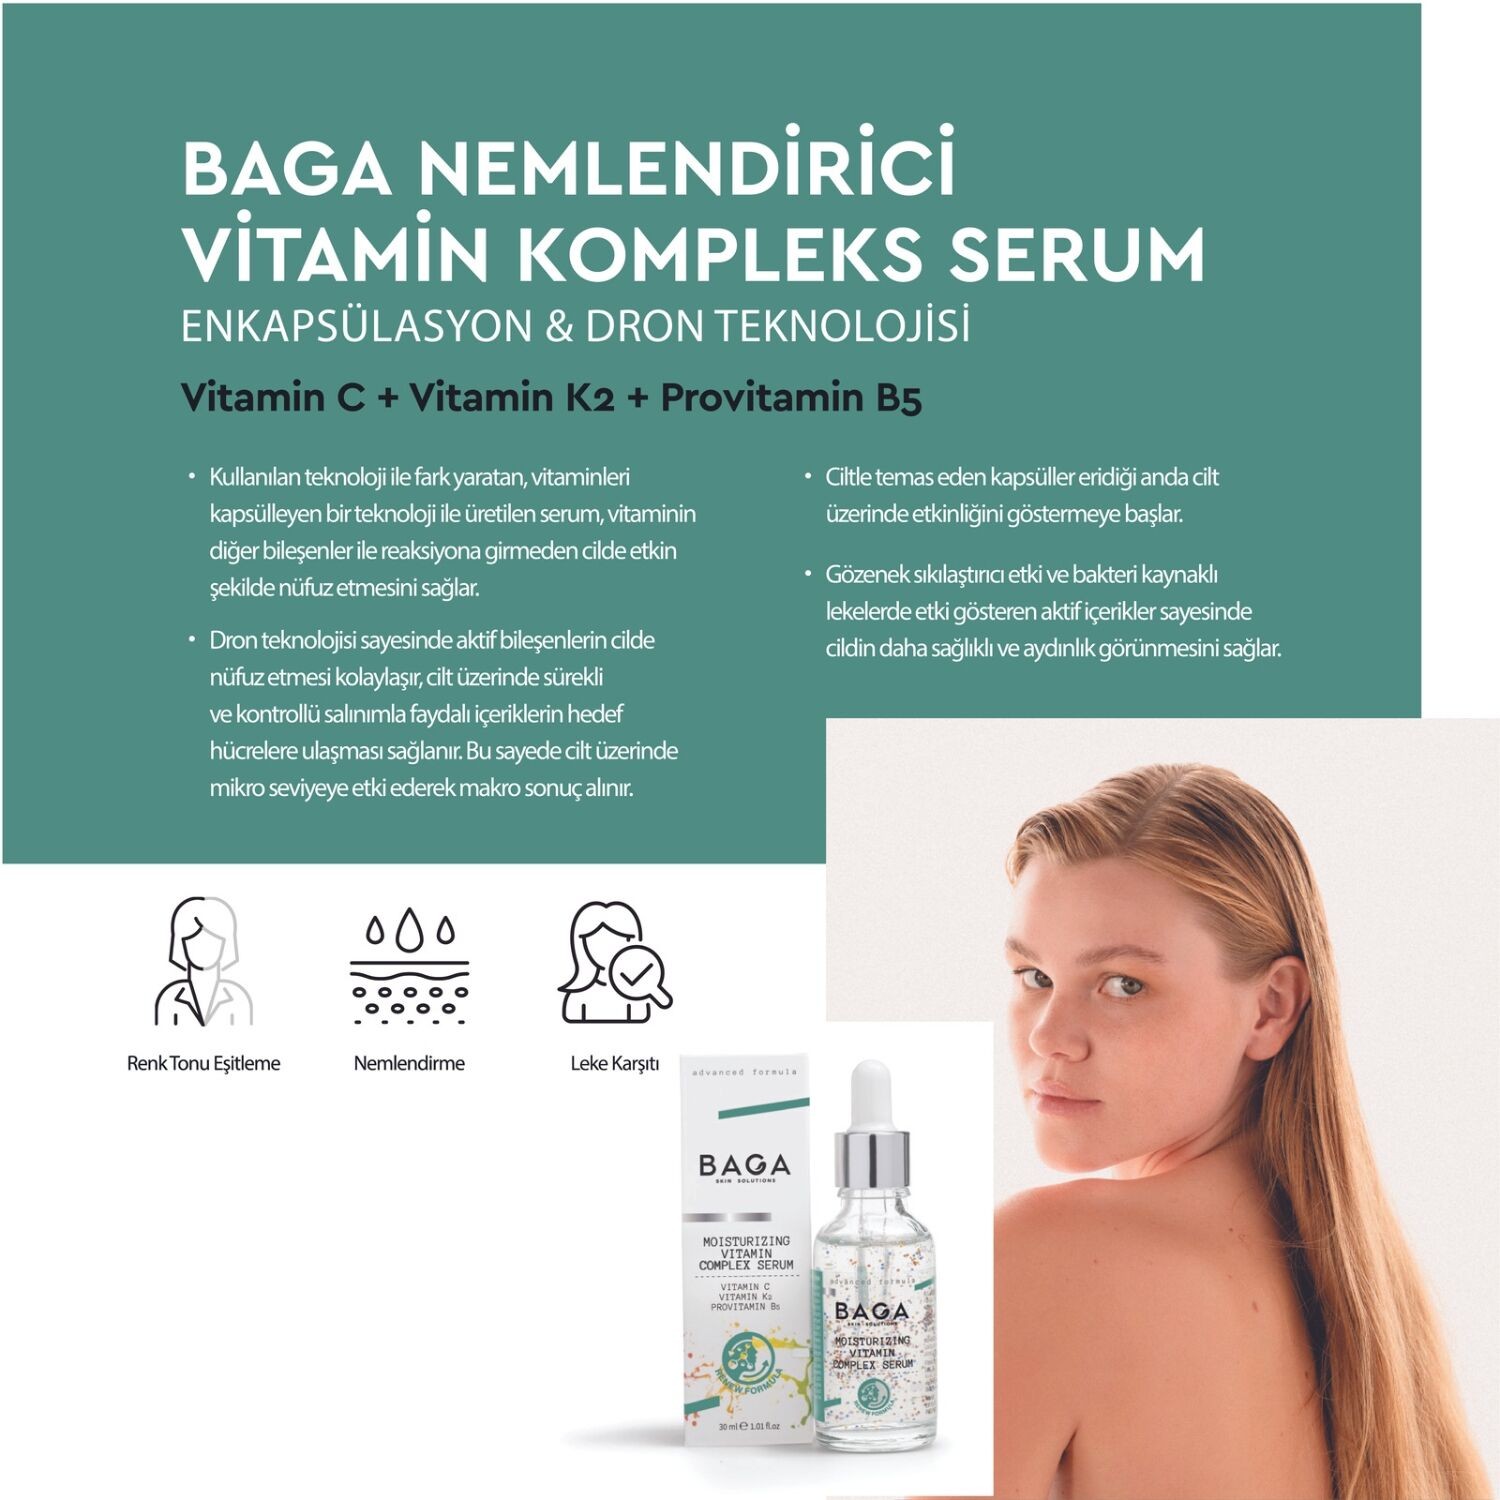 Nemlendirici Vitamin Kompleks Serum (Vitamin C + Vitamin K2 + Provitamin B5)